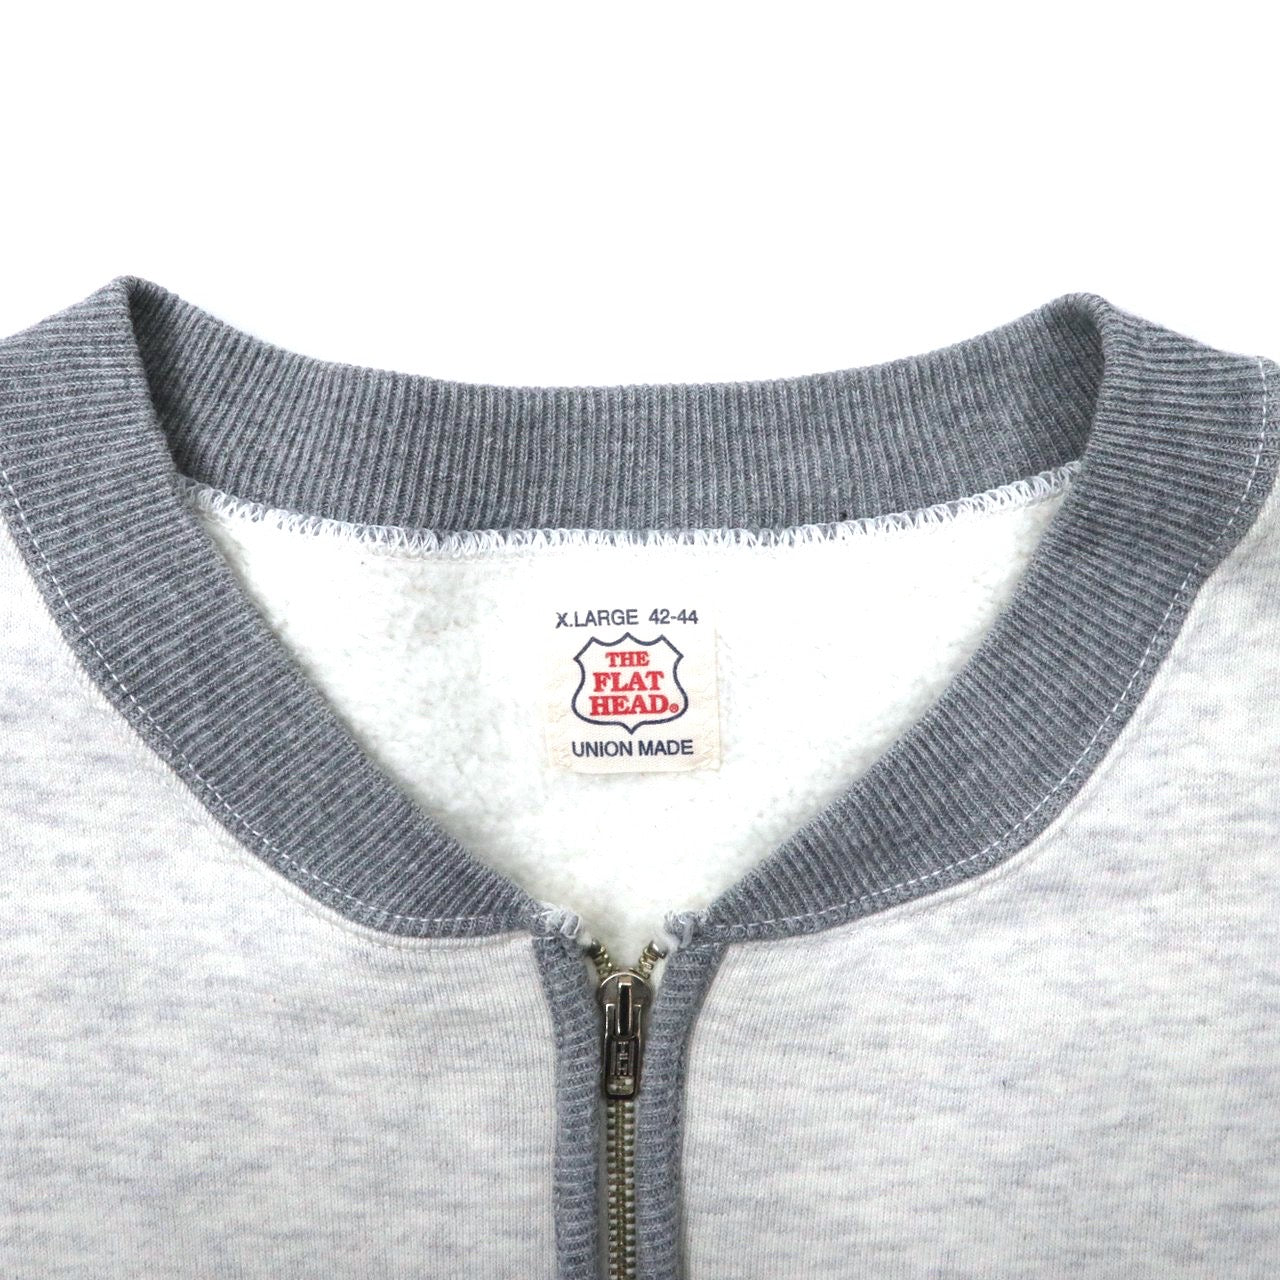 Flat Head Half Zip Sweatshirt XL Gray Cotton BRUSHED LINING Back 